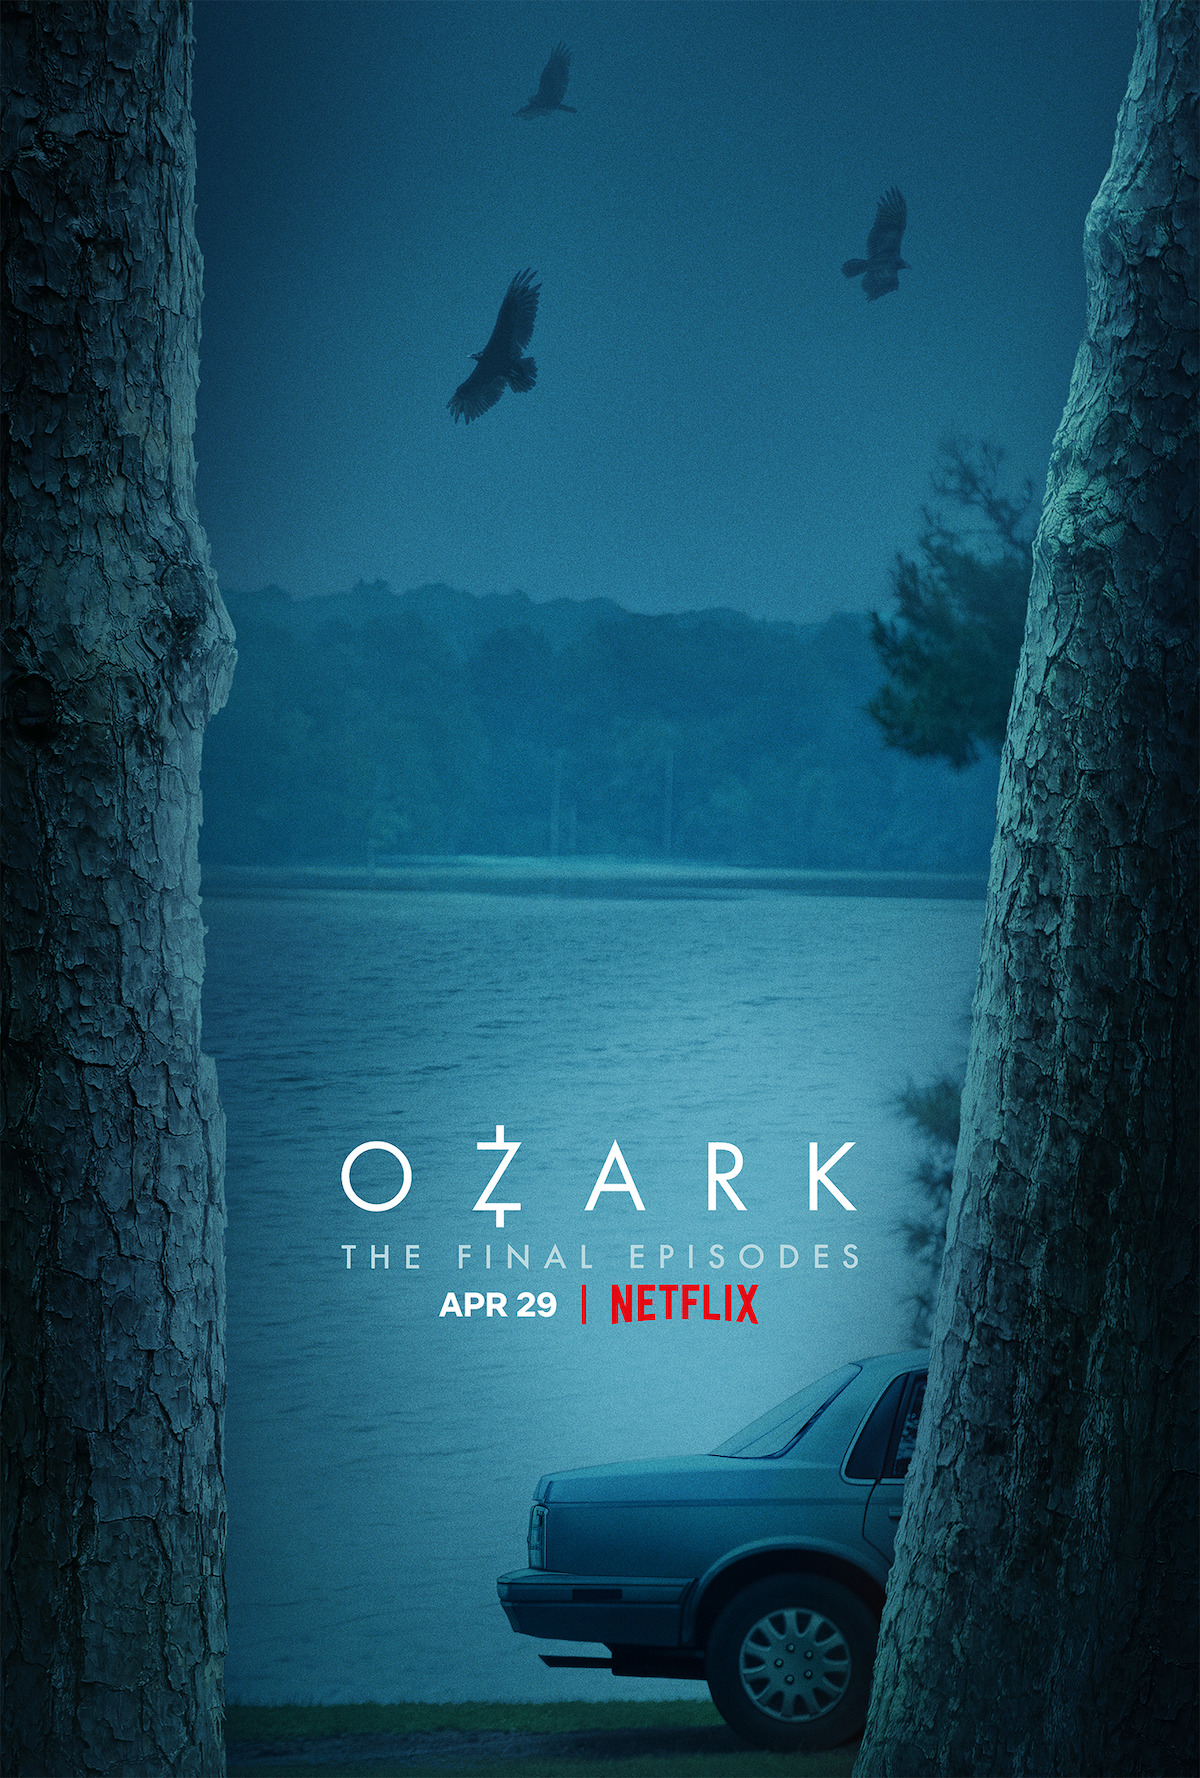 Ozark: Season 4 Part 2 Comes to Netflix April 29 - On Tap Sports Net